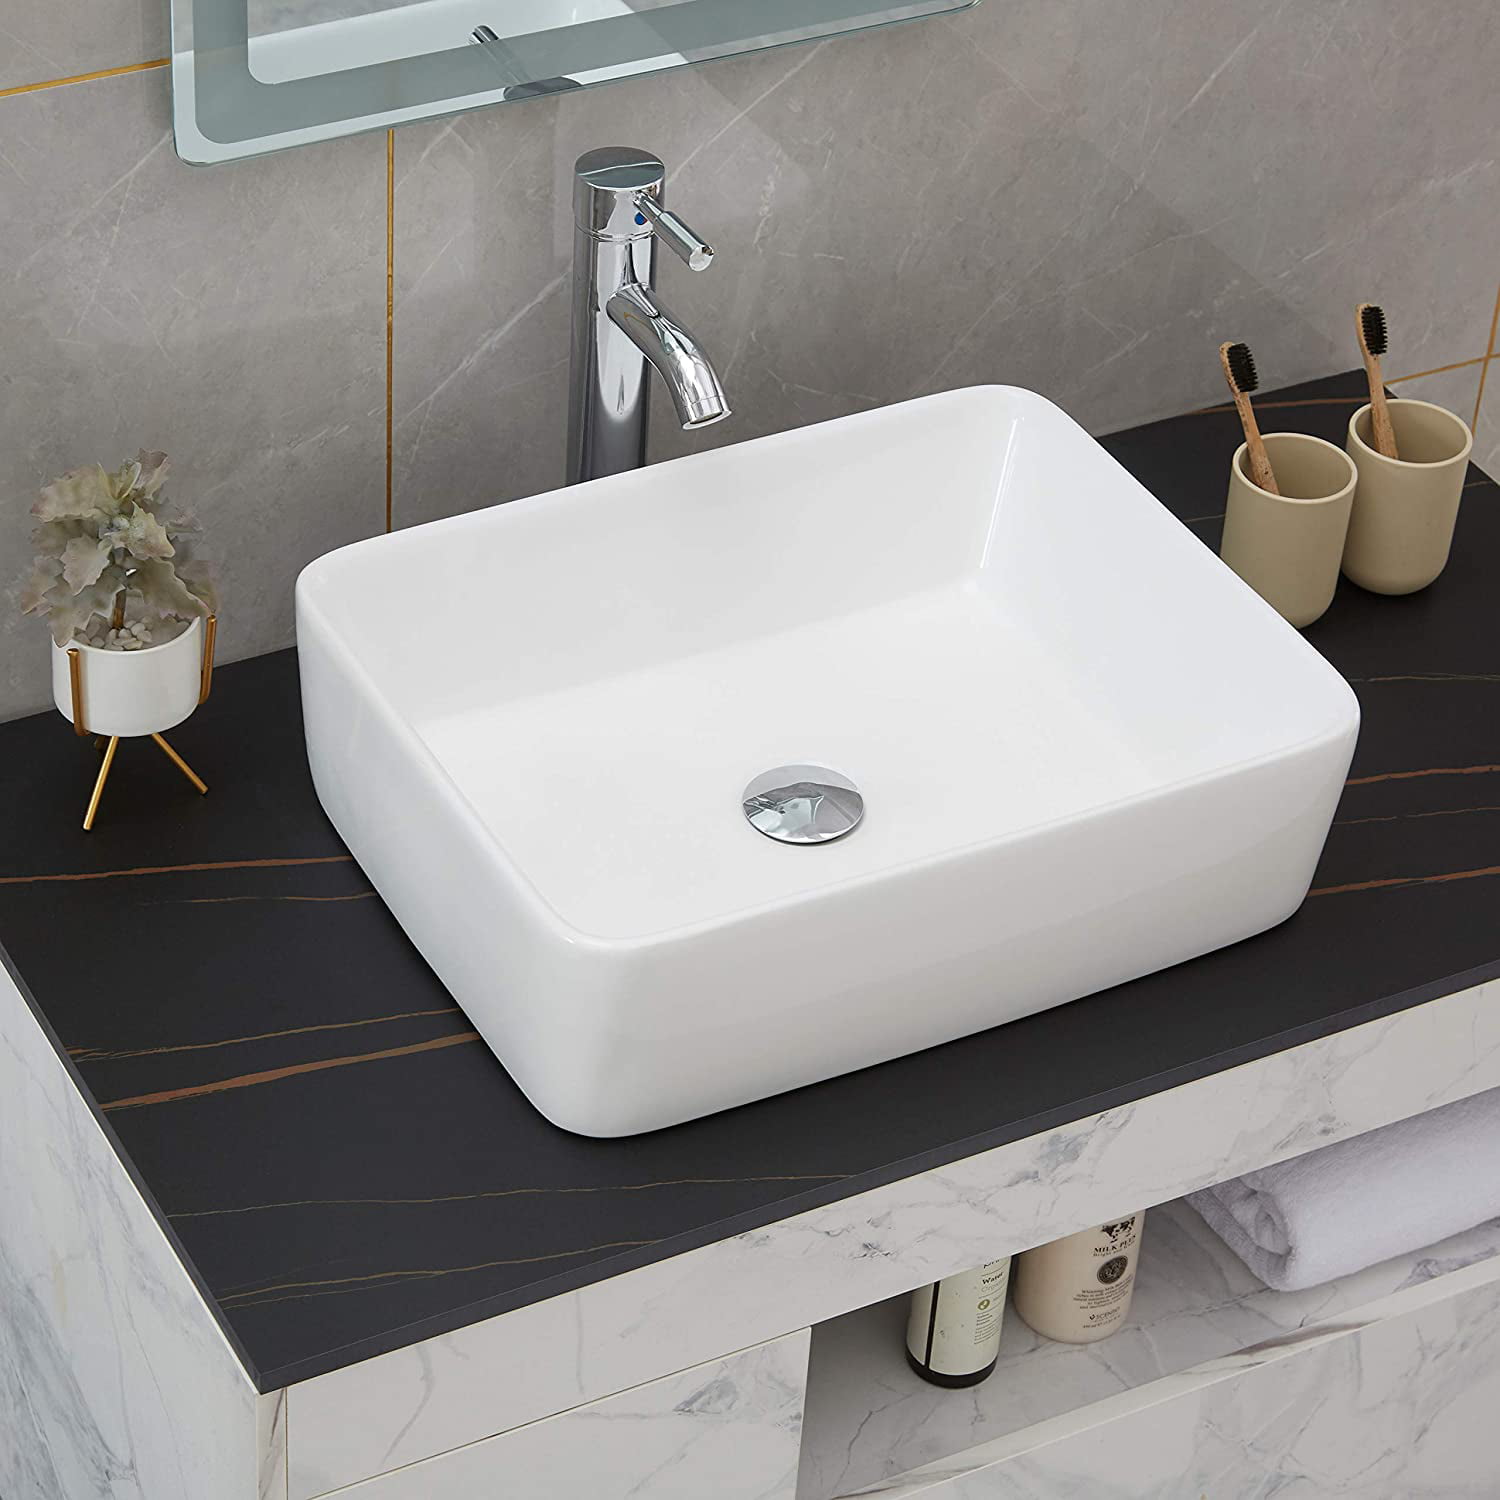 Hotis 19x15 Rectangle White Porcelain Ceramic Bathroom Vessel Vanity Sink,Vessel Sink Black Line Trim Rectangular Art Basin,Above Counter installation